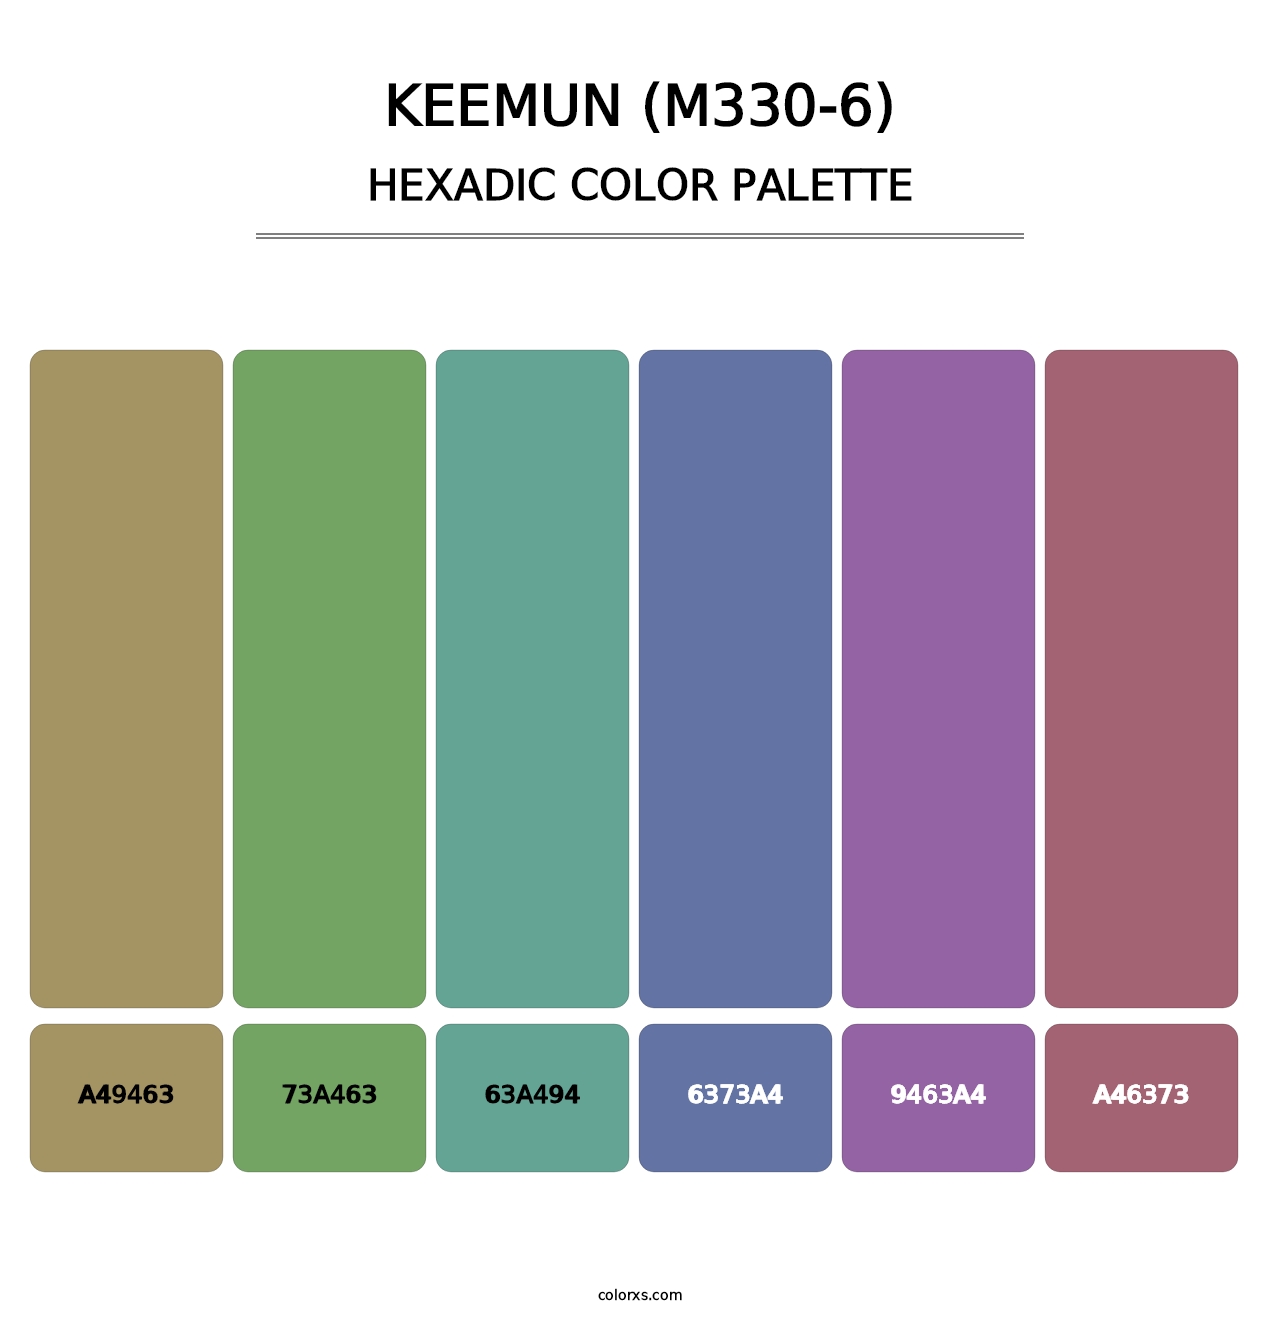 Keemun (M330-6) - Hexadic Color Palette